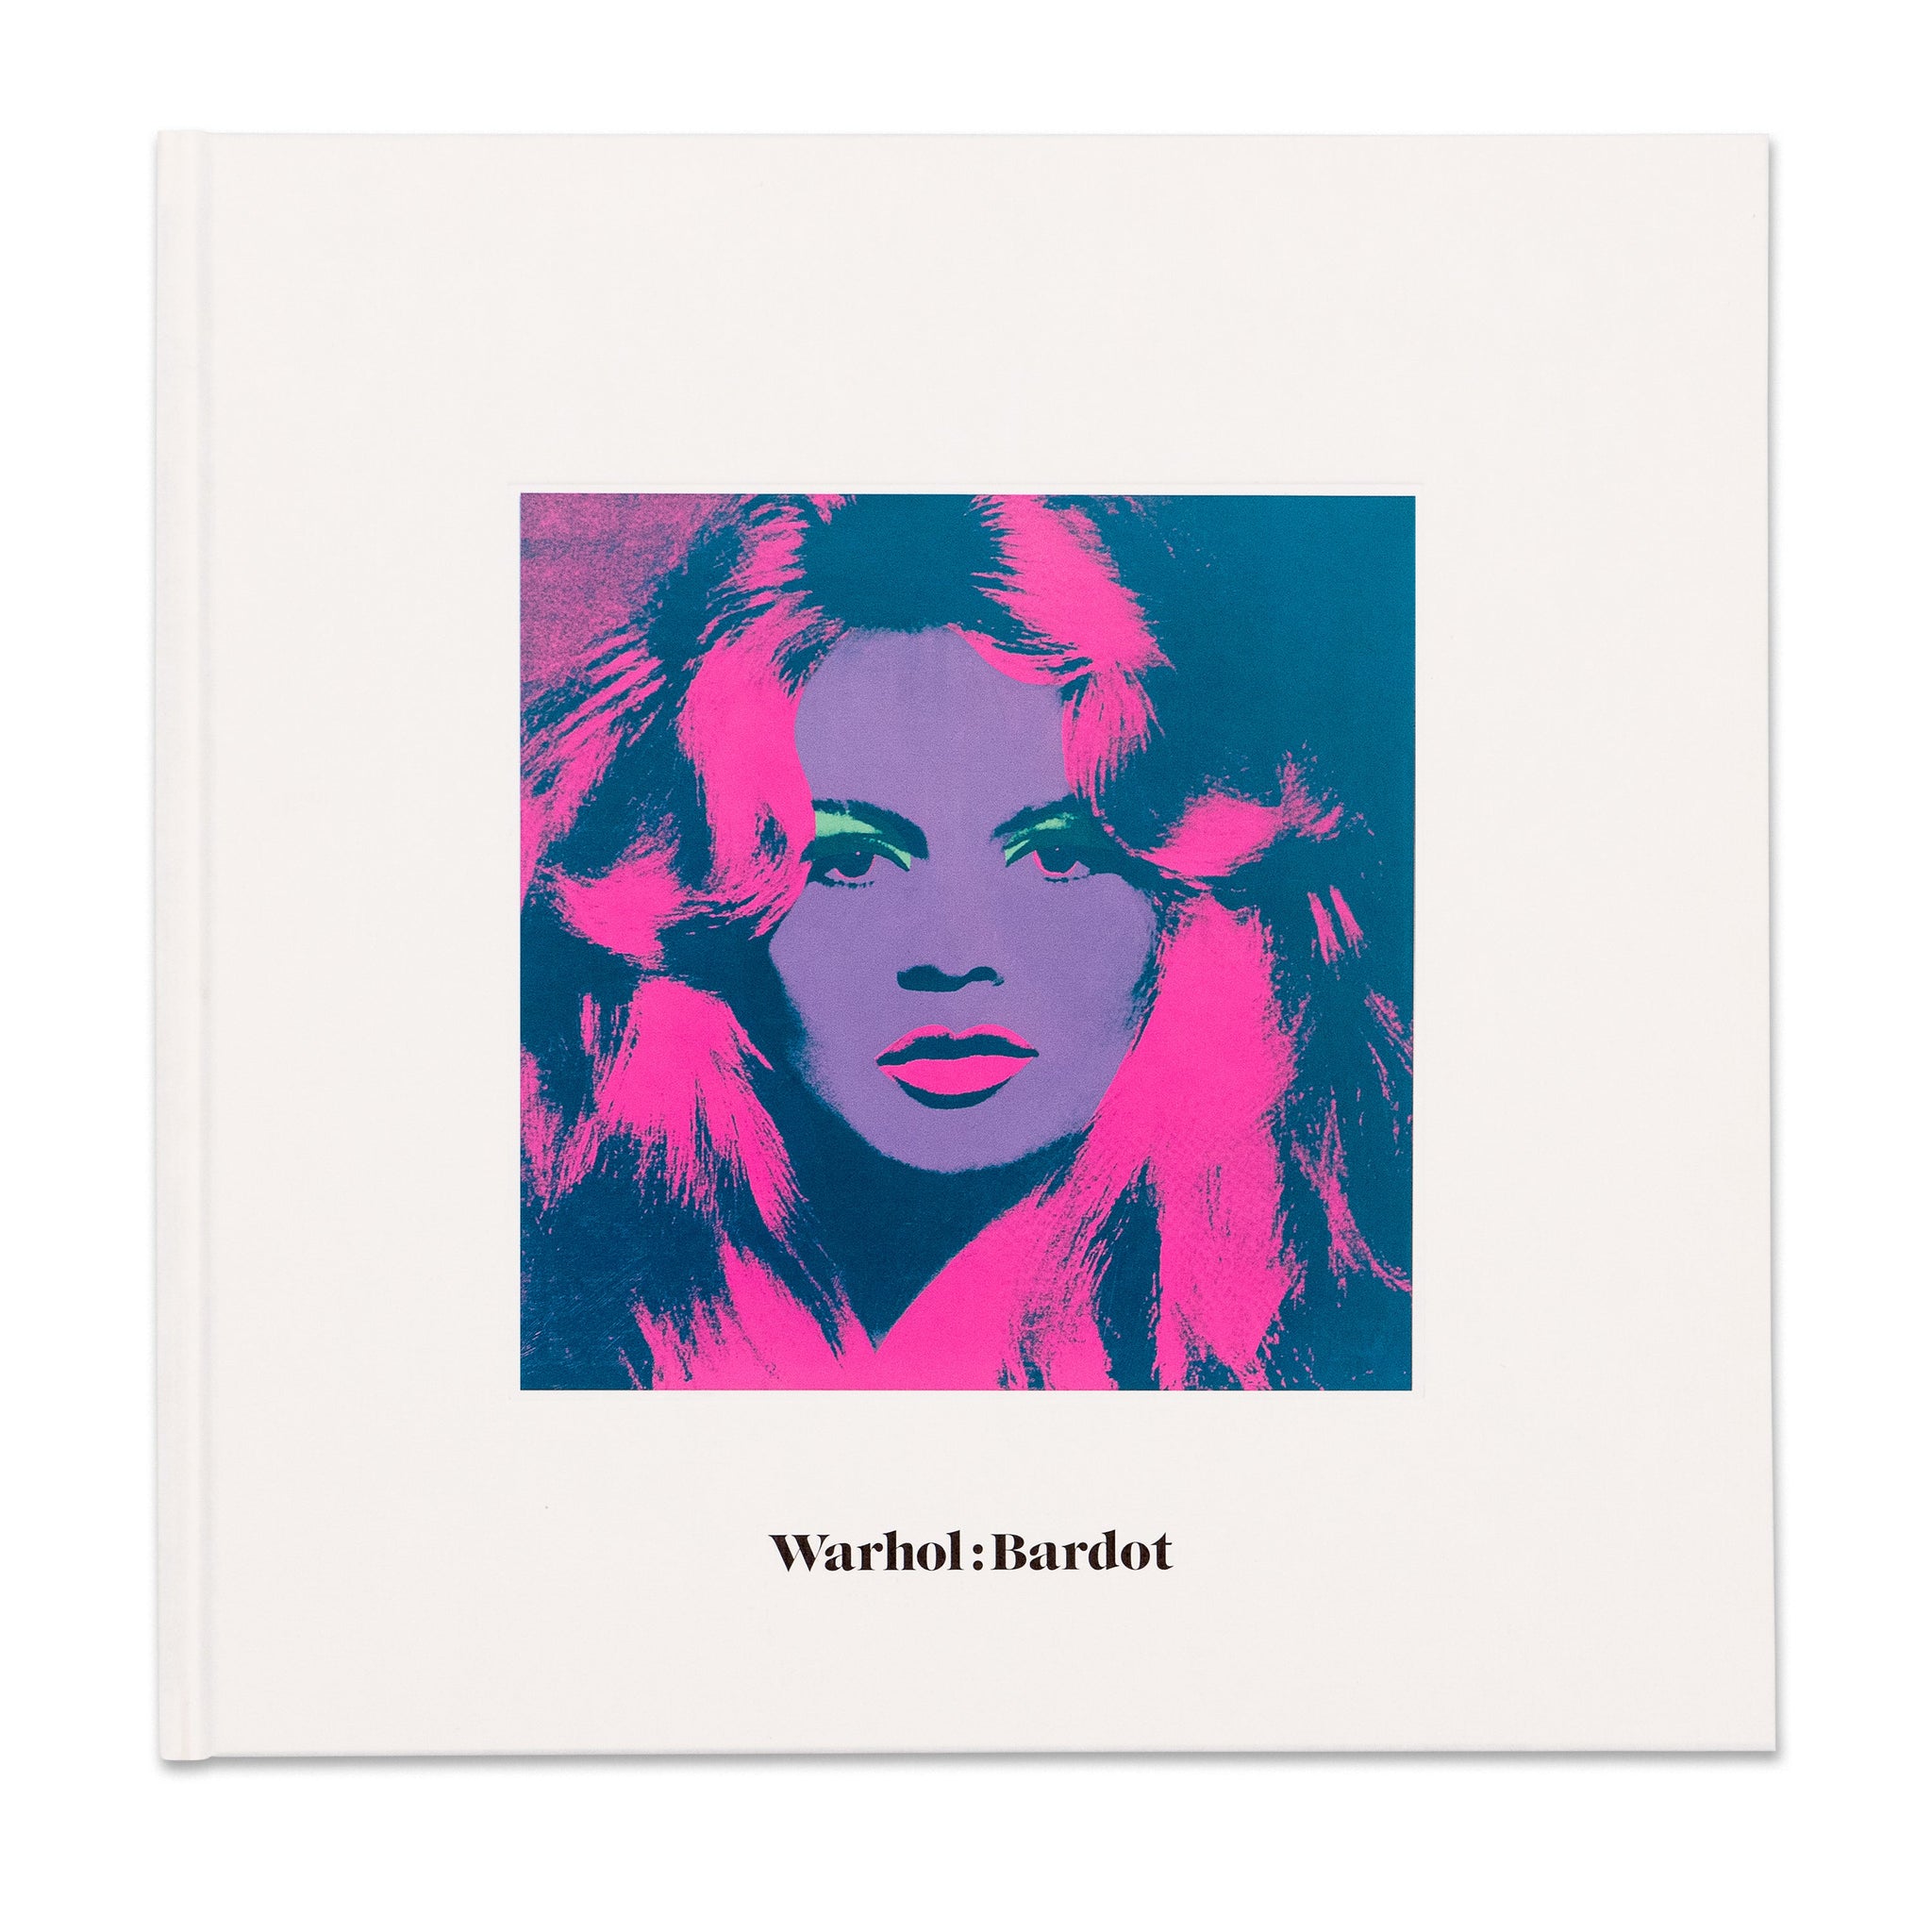 Warhol: Bardot